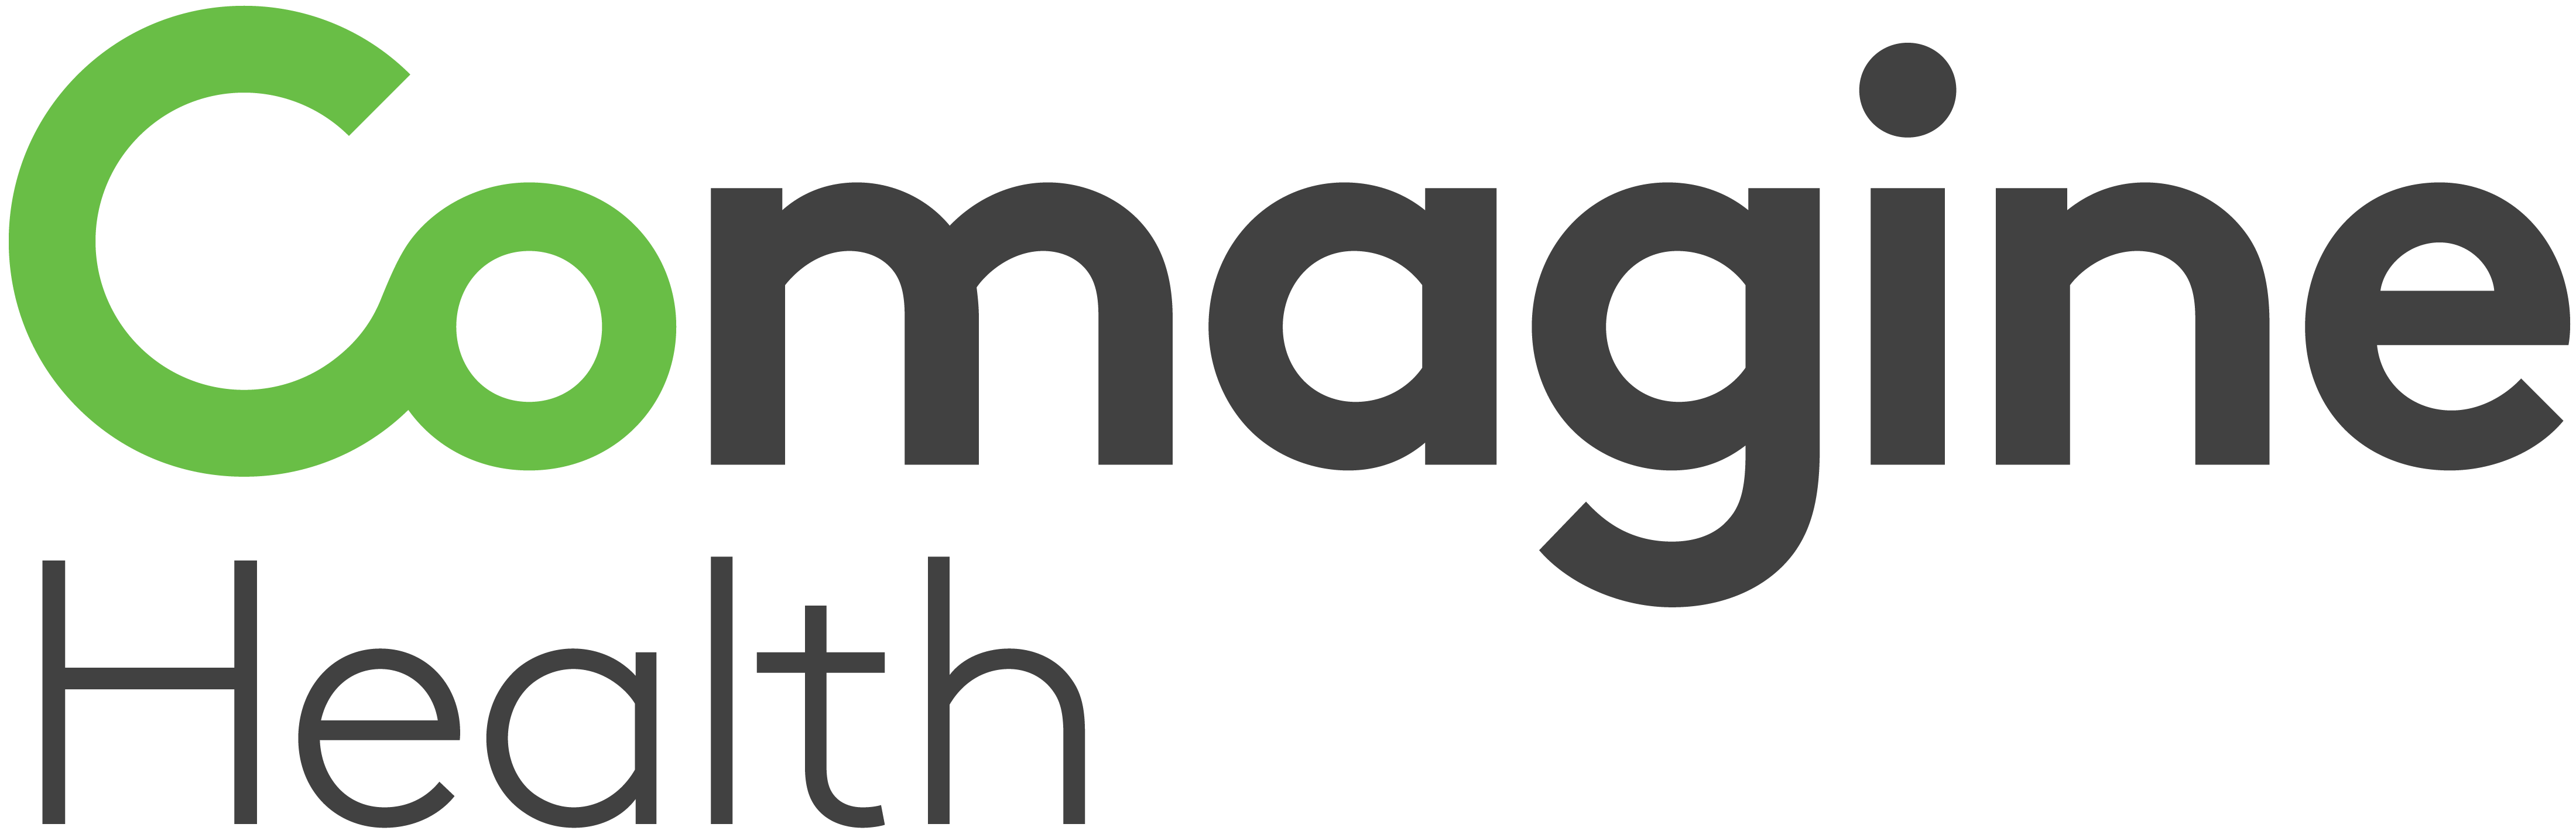 Logo for Comagine Health